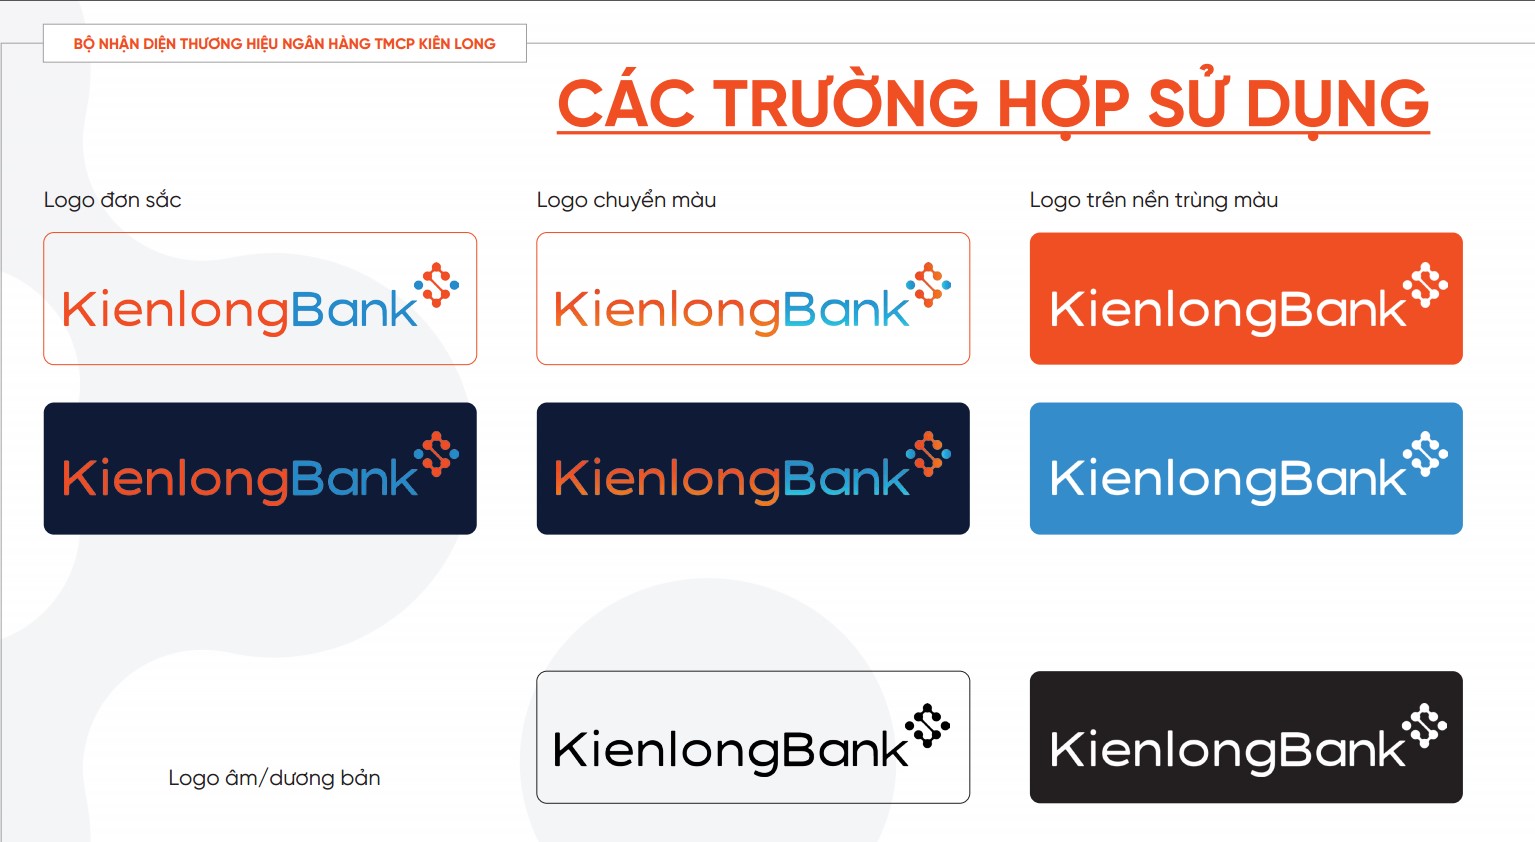 cac-truong-hop-su-dung-logo-kienlongbank